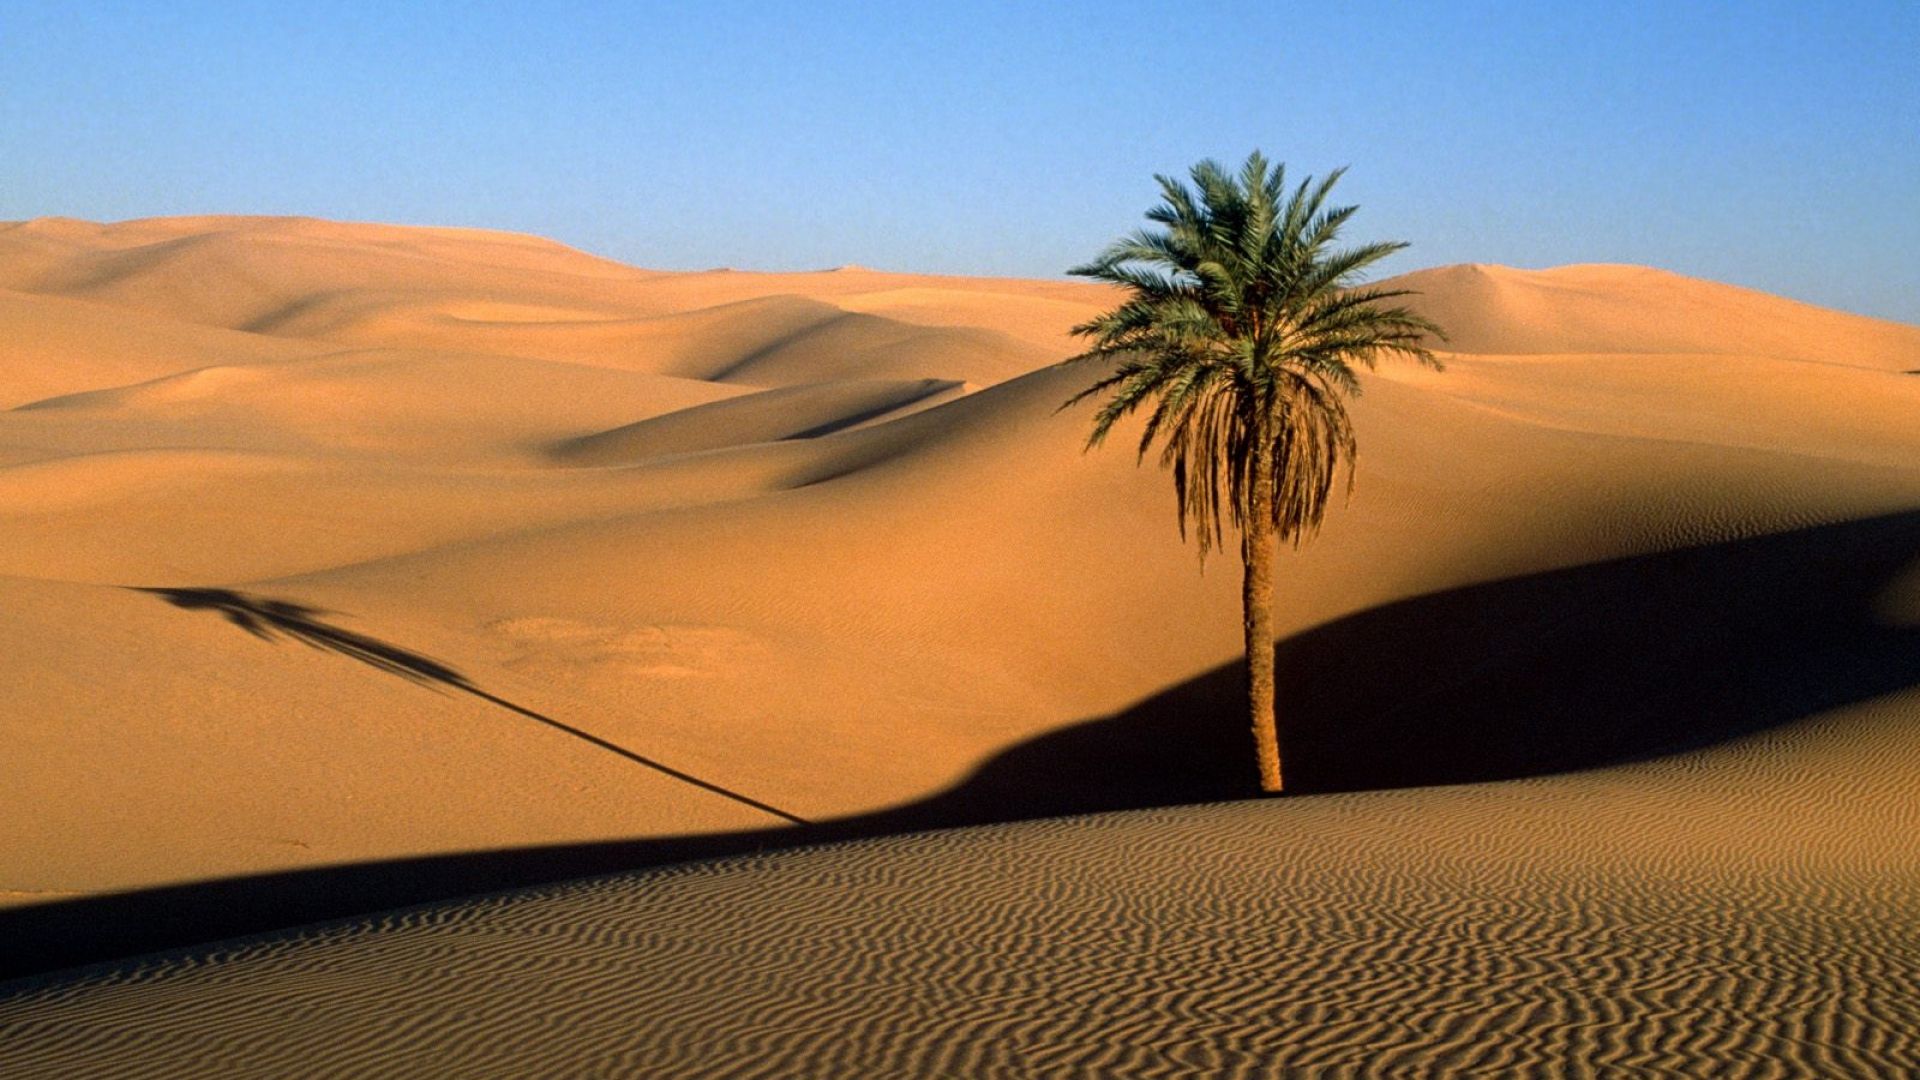 Download Wallpaper 1920x1080 desert, sand, dunes, palm tree, tree, shade, evening Full HD 1080p HD Background